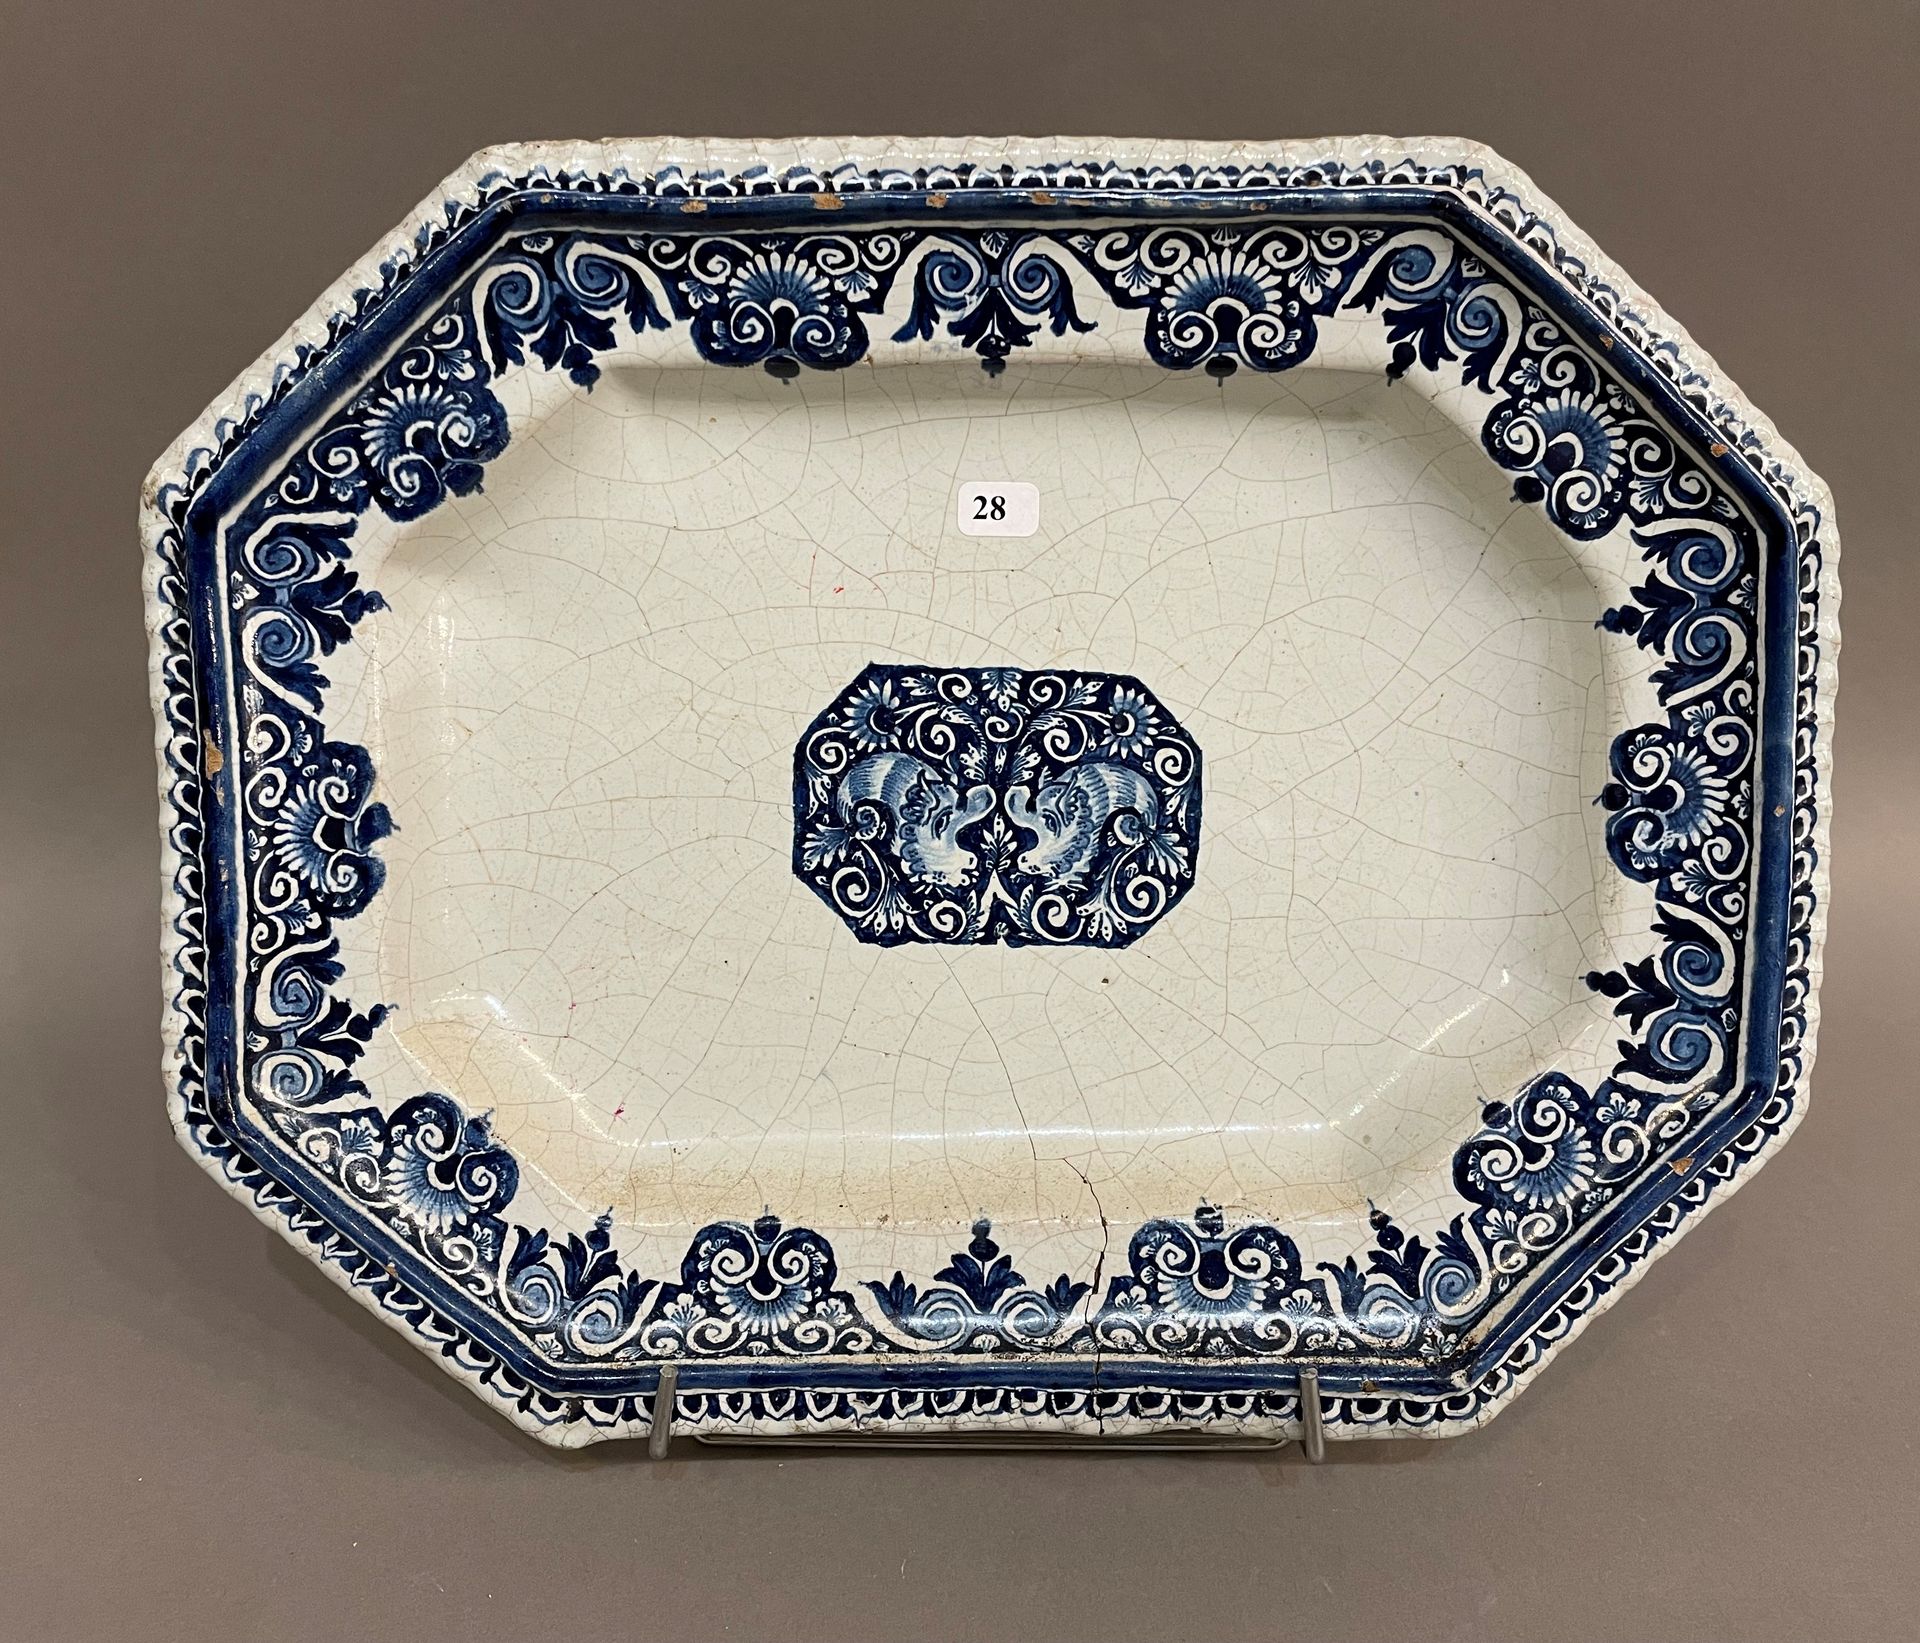 Null 法国

长方形的陶器盘子，以蓝色单色装饰的鲁昂风格，中间有两只海豚，在一个长方形的卡口中，翼上有花纹。

18世纪。

L. 35 cm.

裂开了。